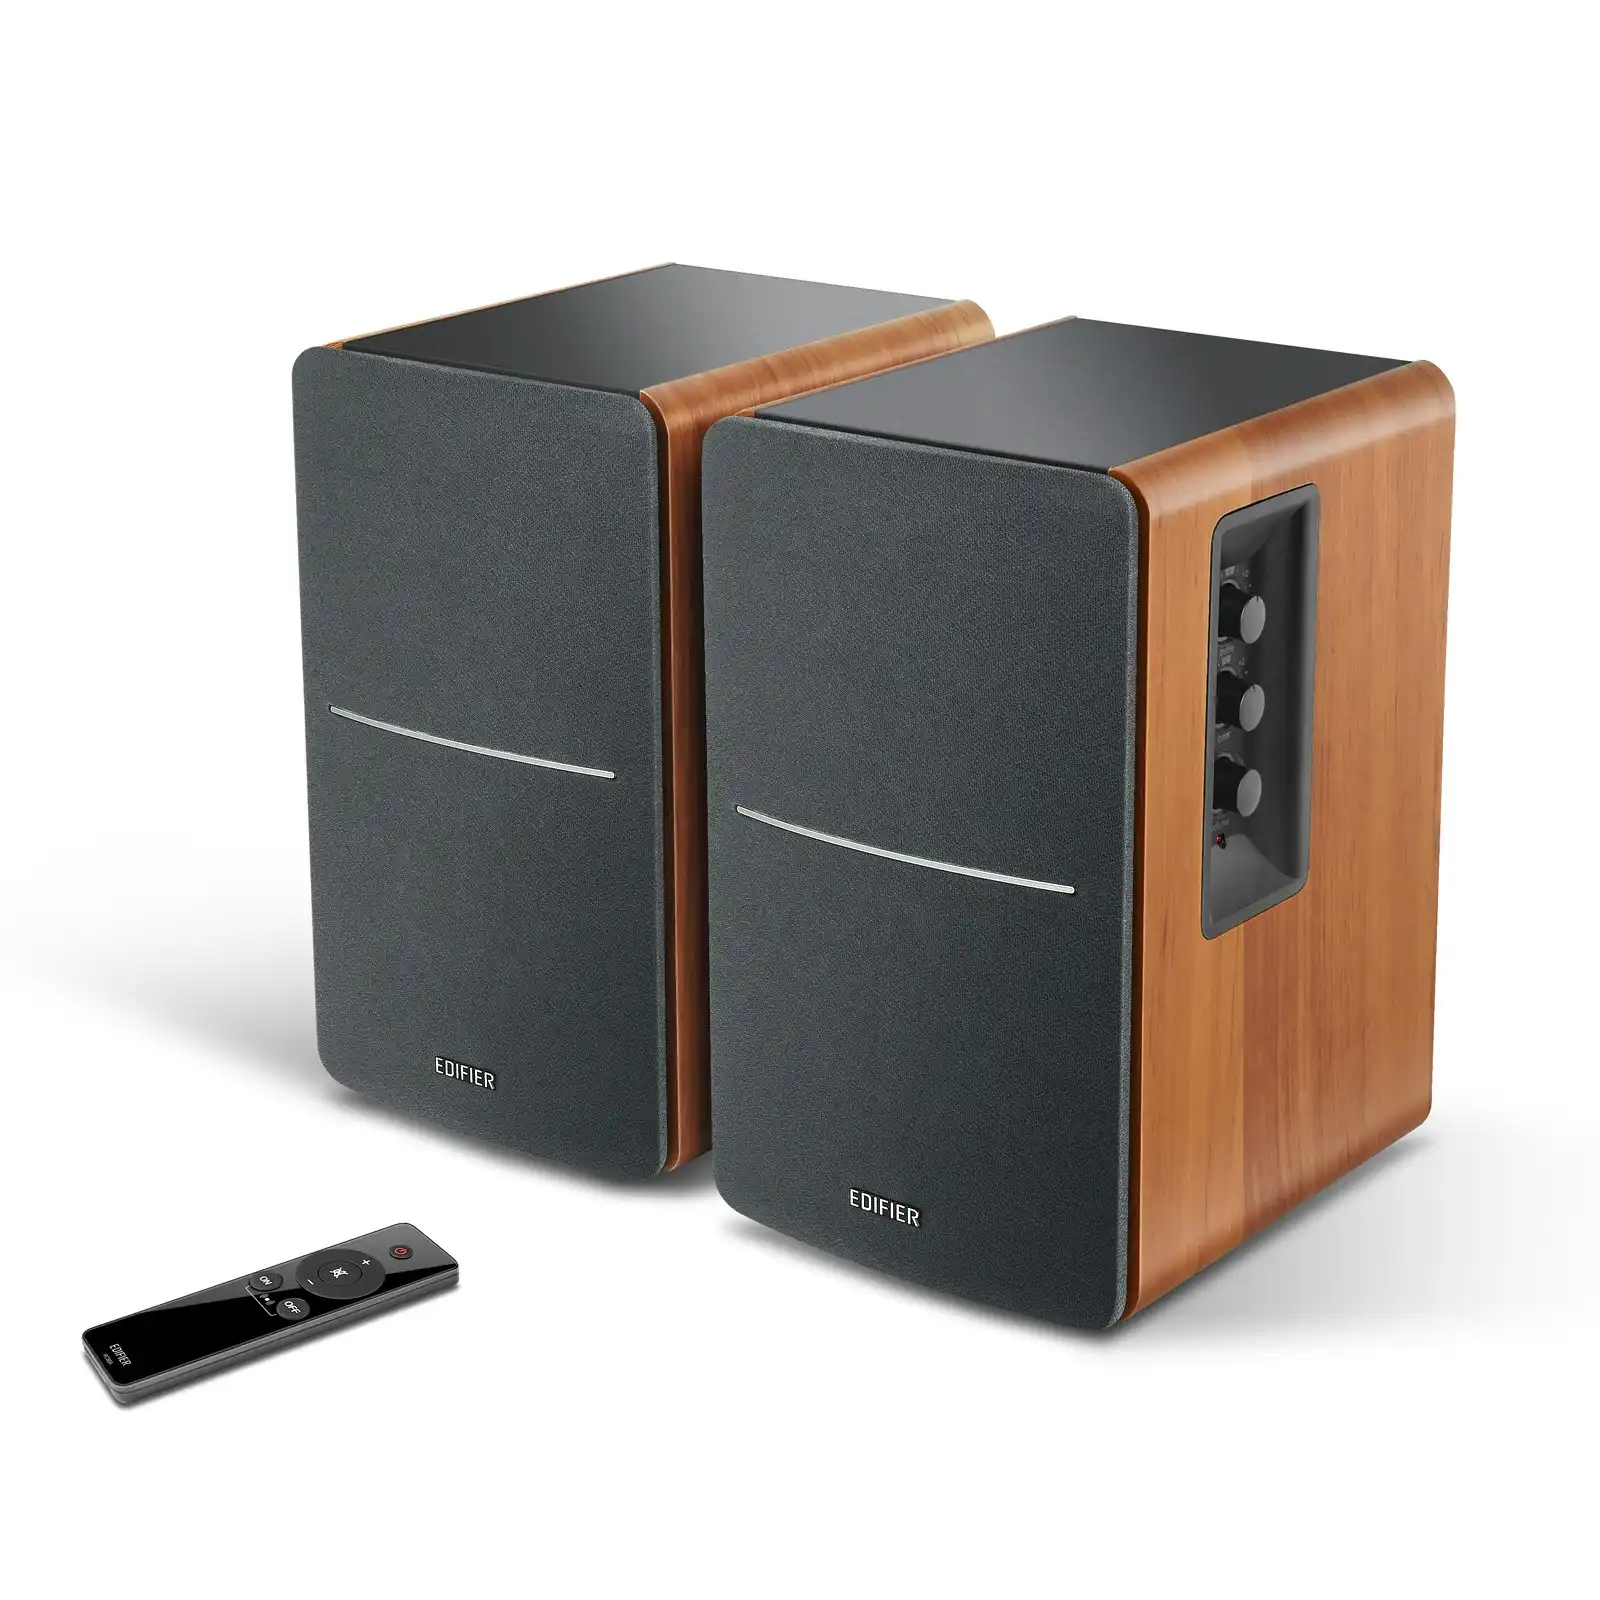 Edifier R1280ts Multimedia 2.0 Studio Speakers - Grey, Wood